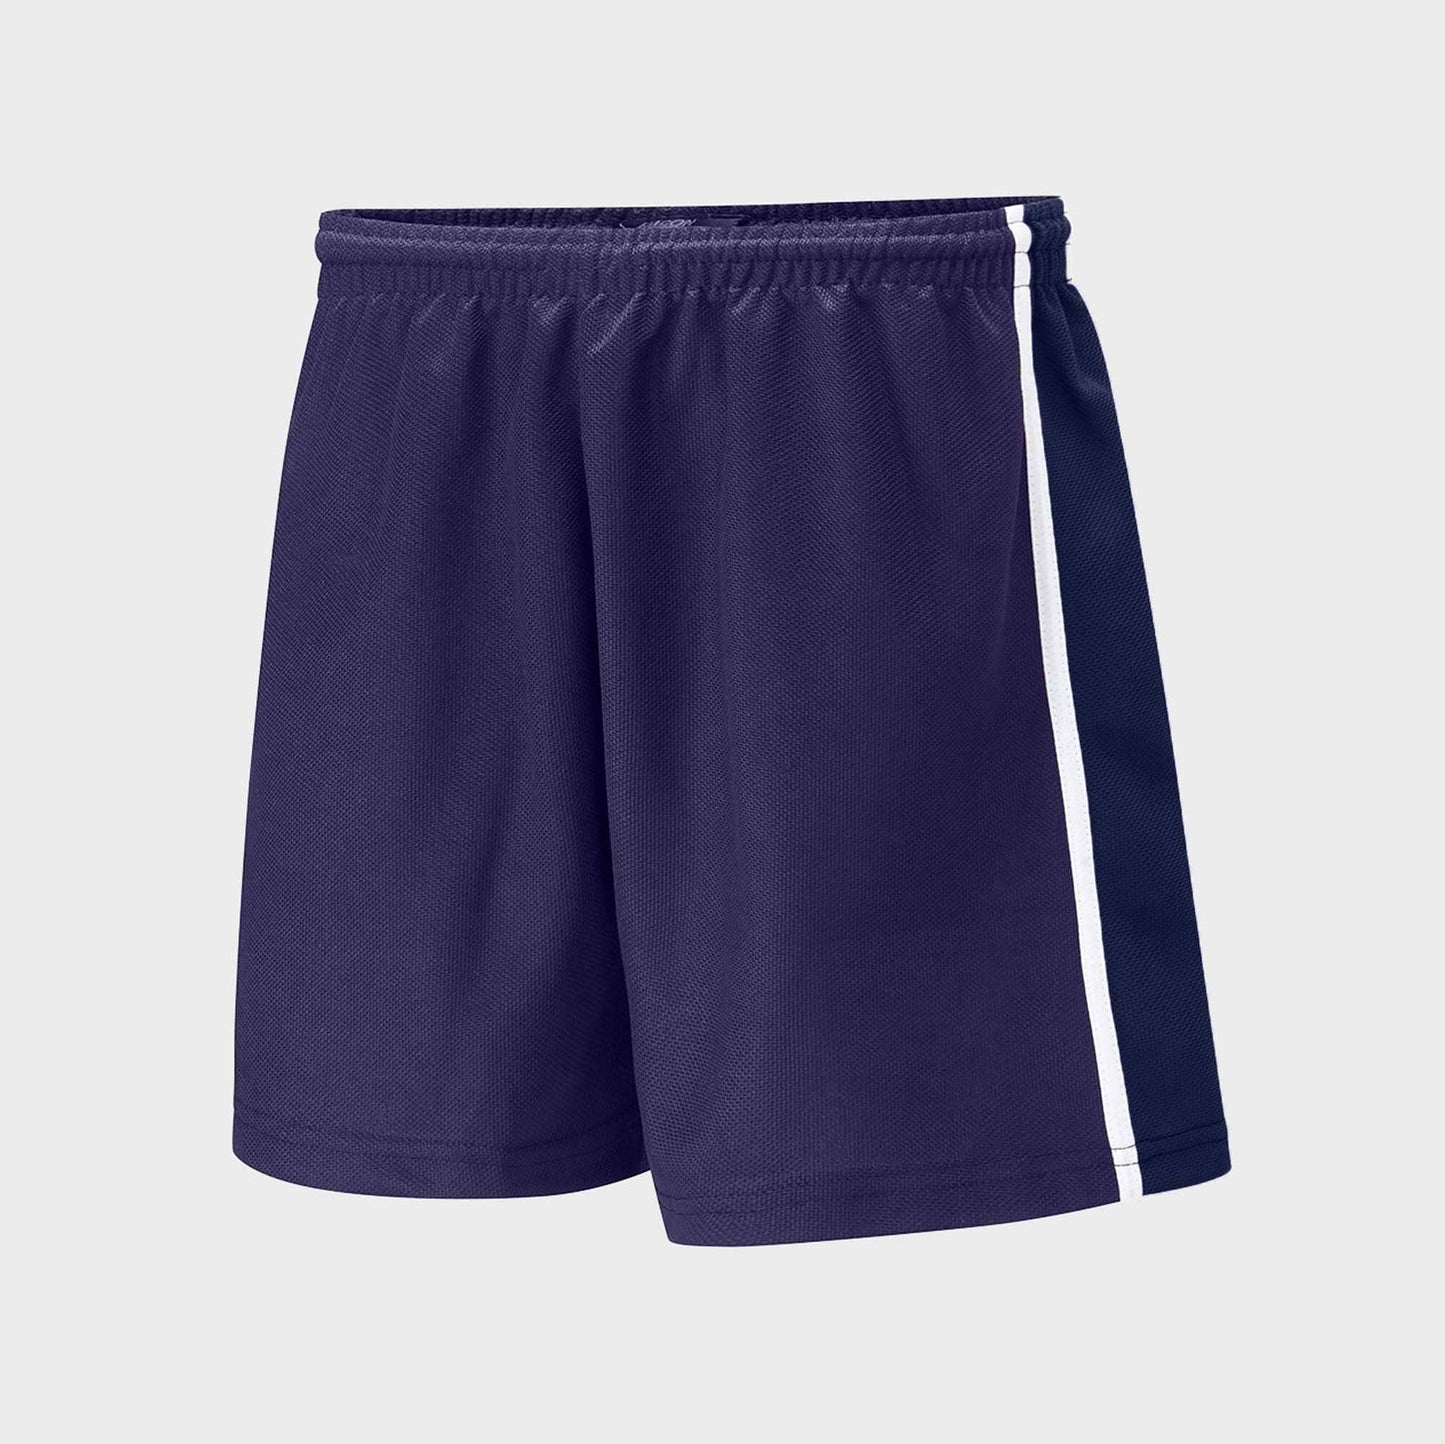 Falcon Men's Activewear Side Panel Shorts Men's Shorts HAS Apparel Purple & Navy XS 